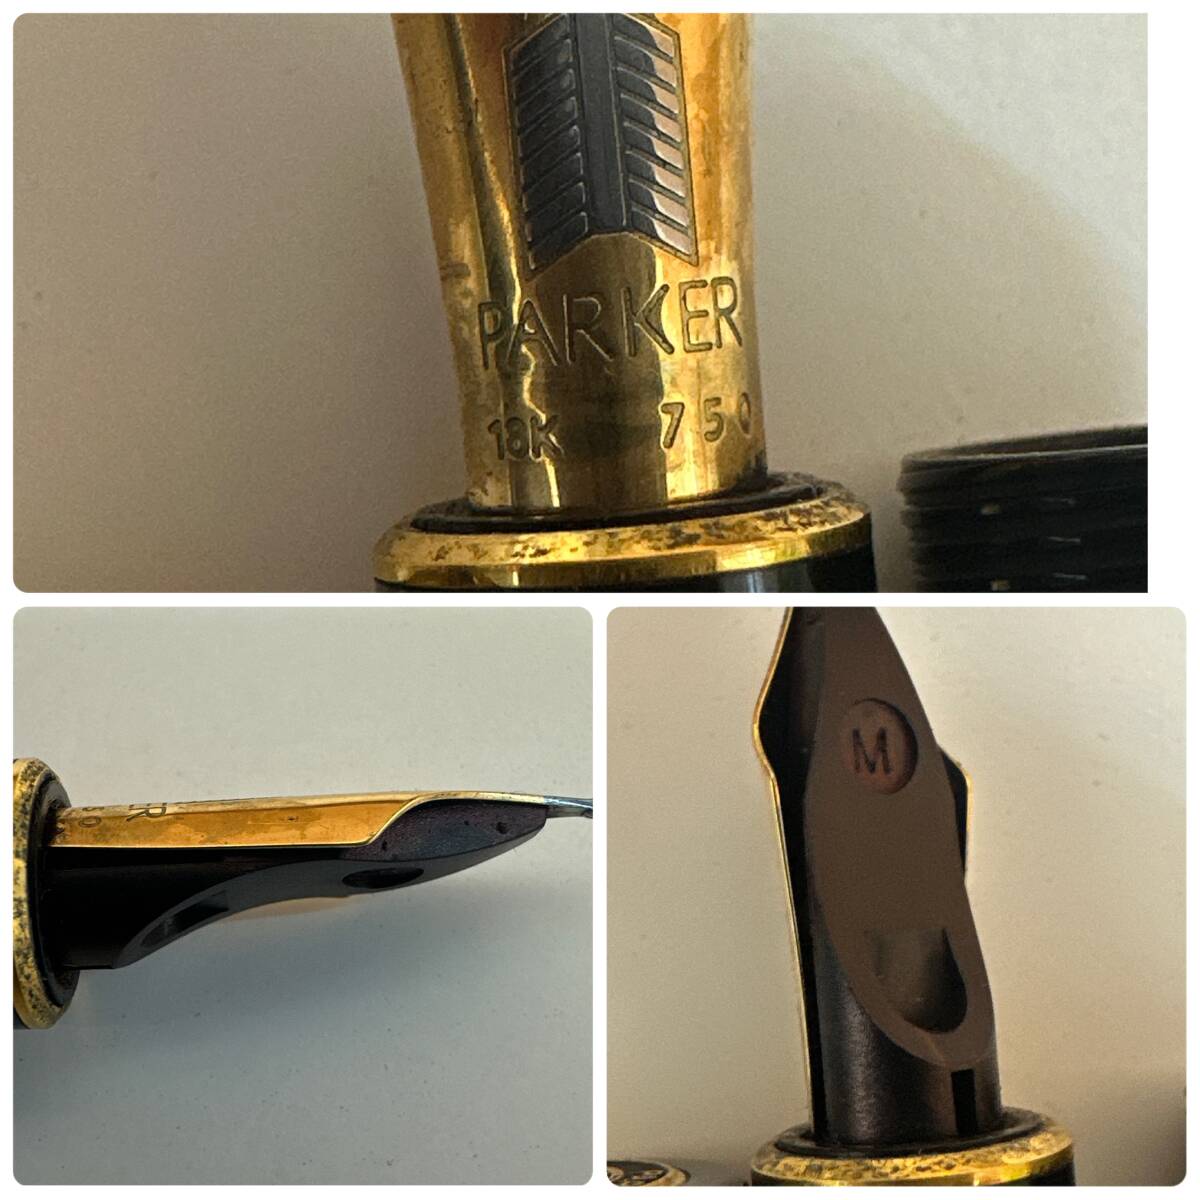 【TM0429】PARKER パーカー デュオフォールド 万年筆 ペン先18K 750 木製ケース付 ゴールド × ブラックカラー 筆記用具 文房具の画像7